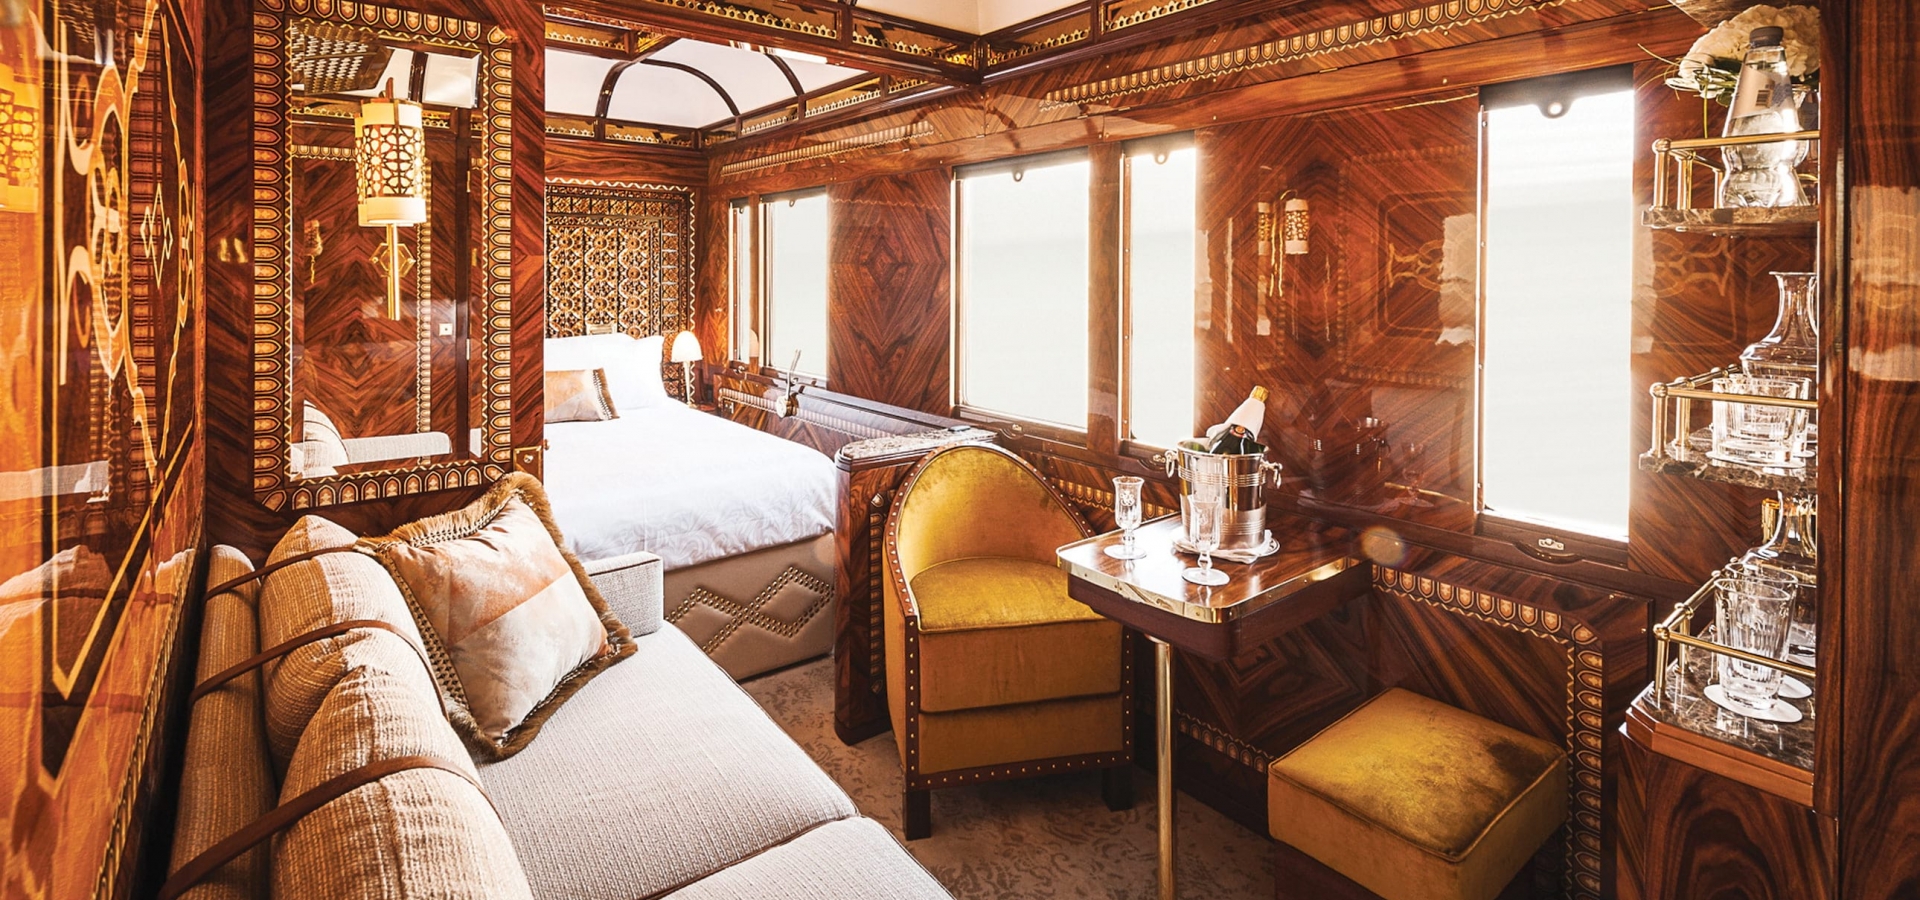 Venice Simplon Orient Express  Luxury Train Journeys in Europe